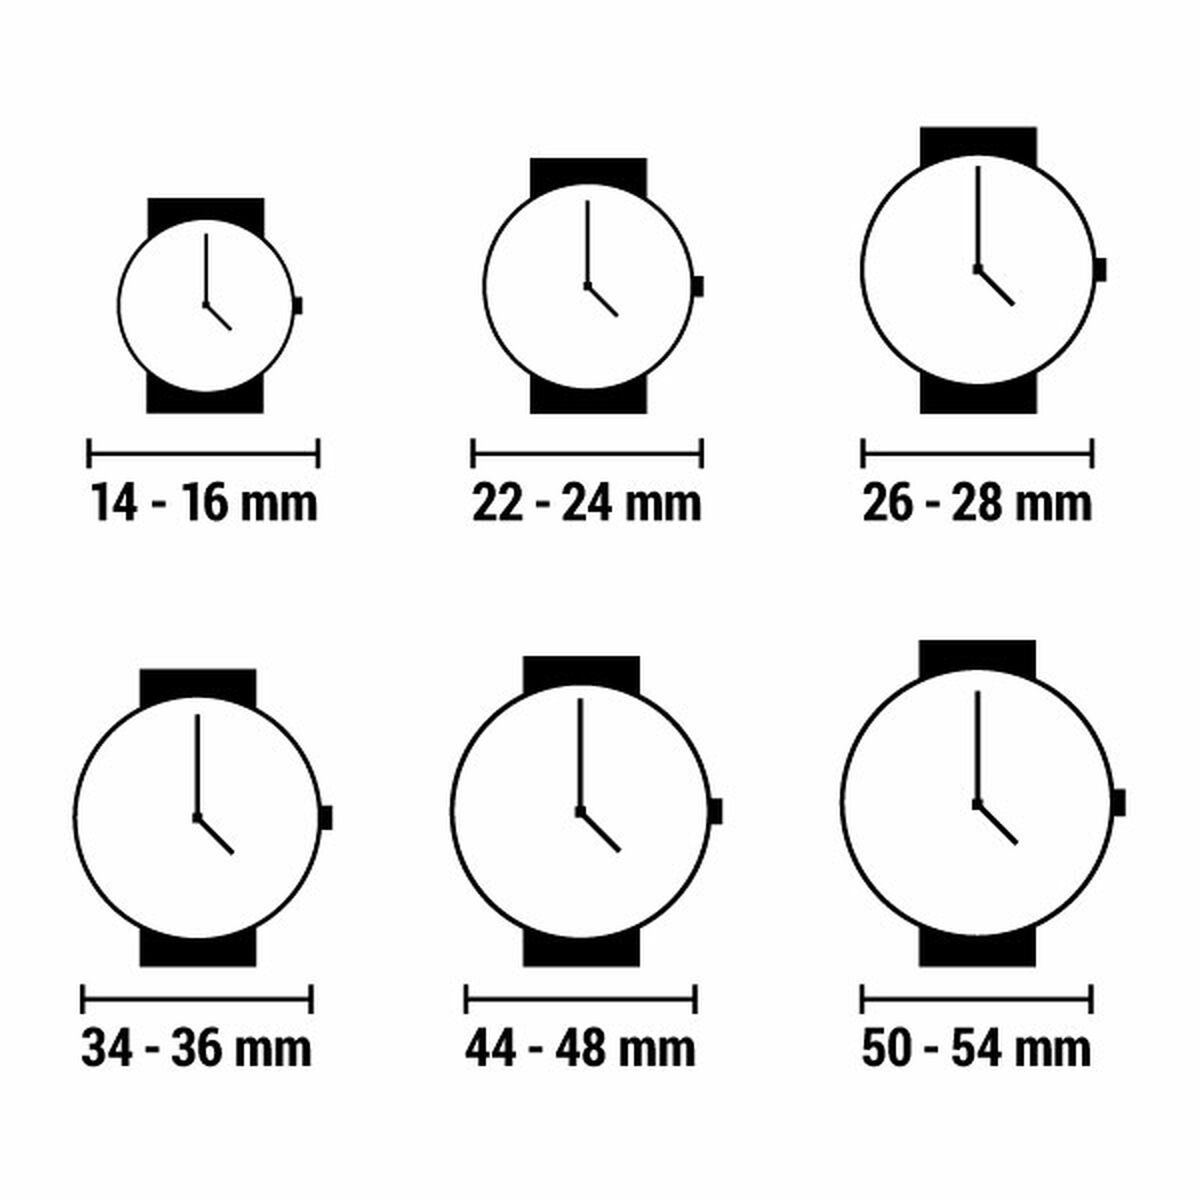 Horloge Dames Timex TW2T88500 (Ø 33 mm)